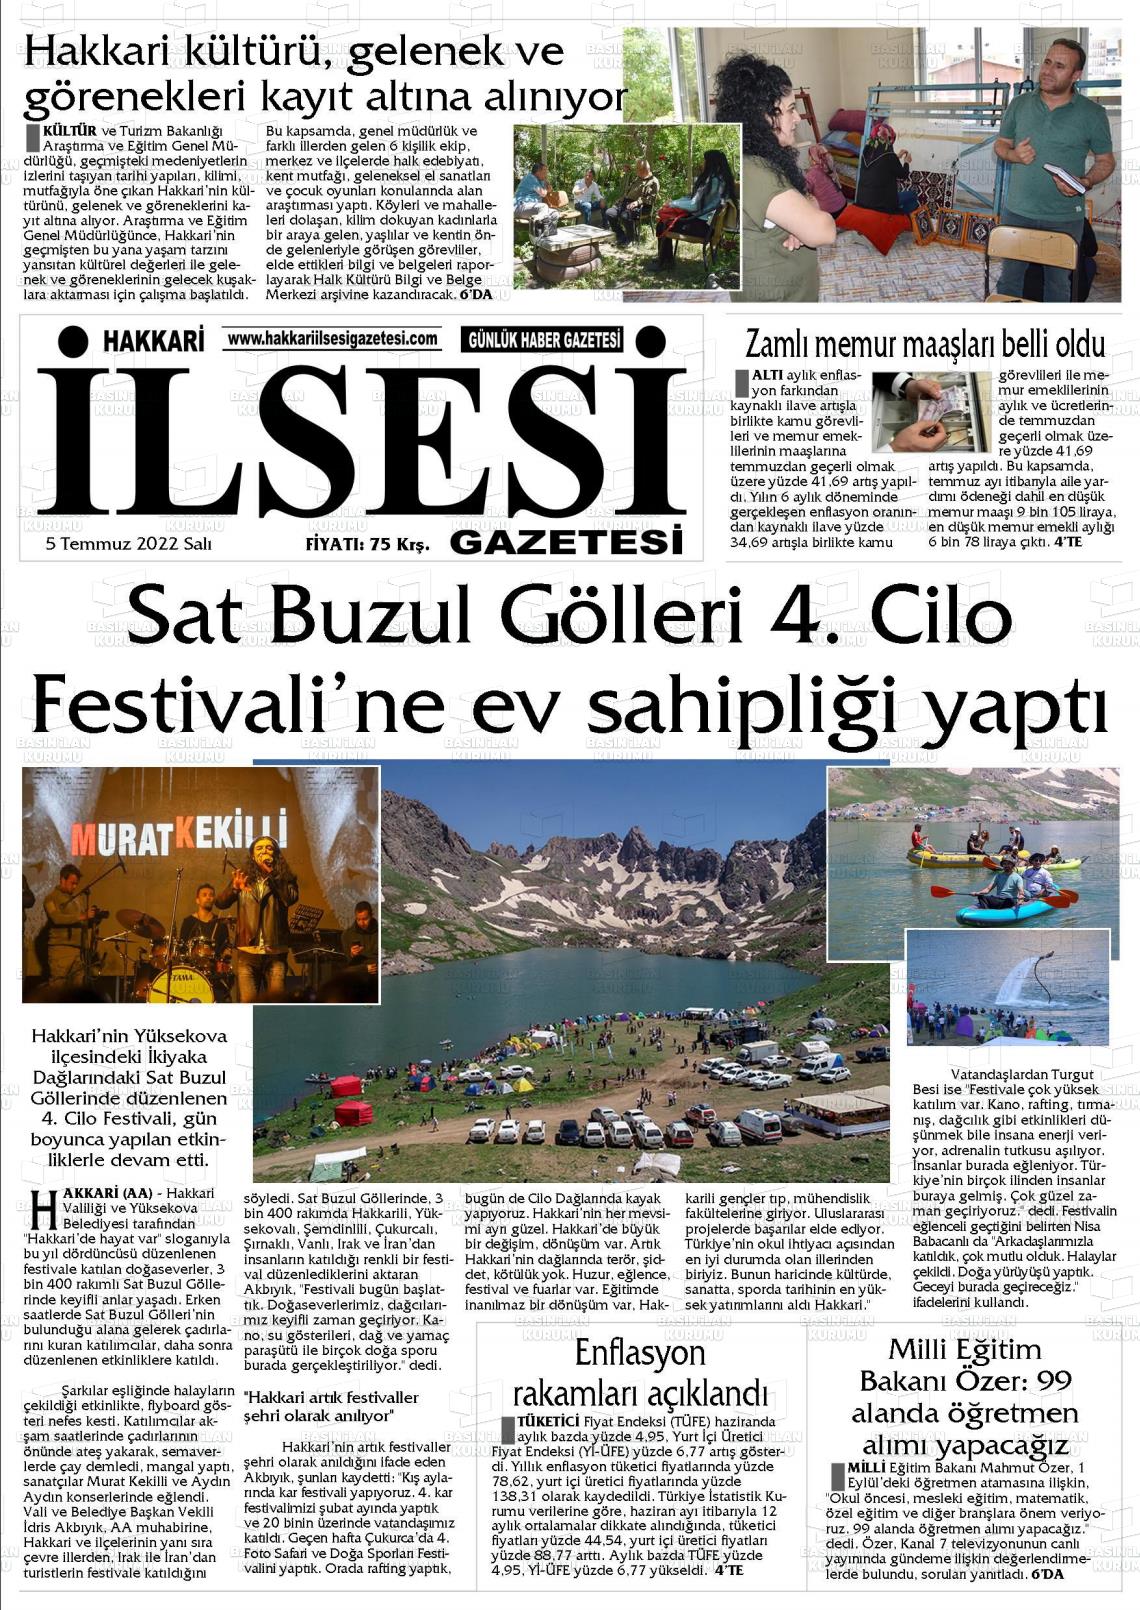 05 Temmuz 2022 Hakkari İl Sesi Gazete Manşeti